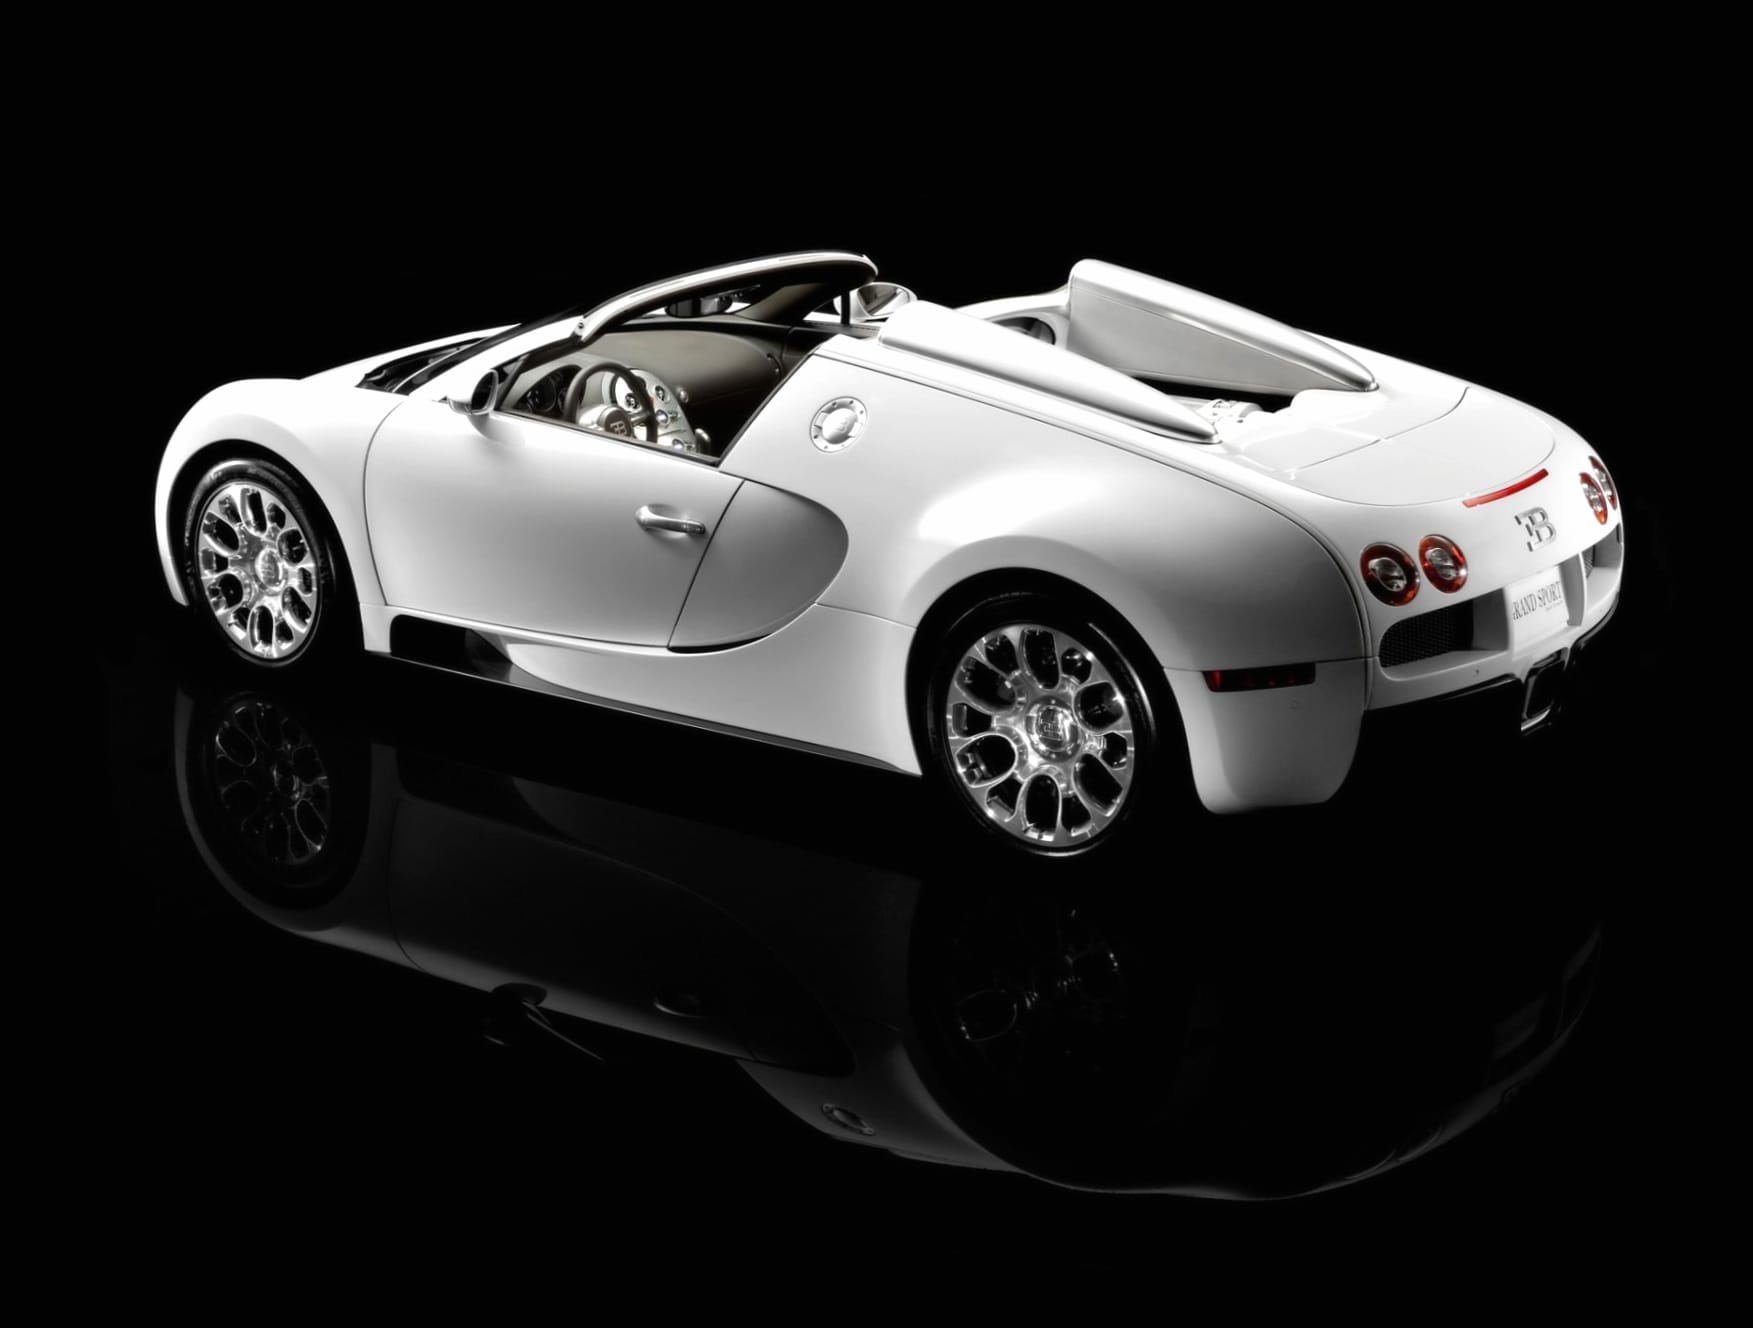 Bugatti Veyron 16-4 Grand Sport at 1024 x 1024 iPad size wallpapers HD quality